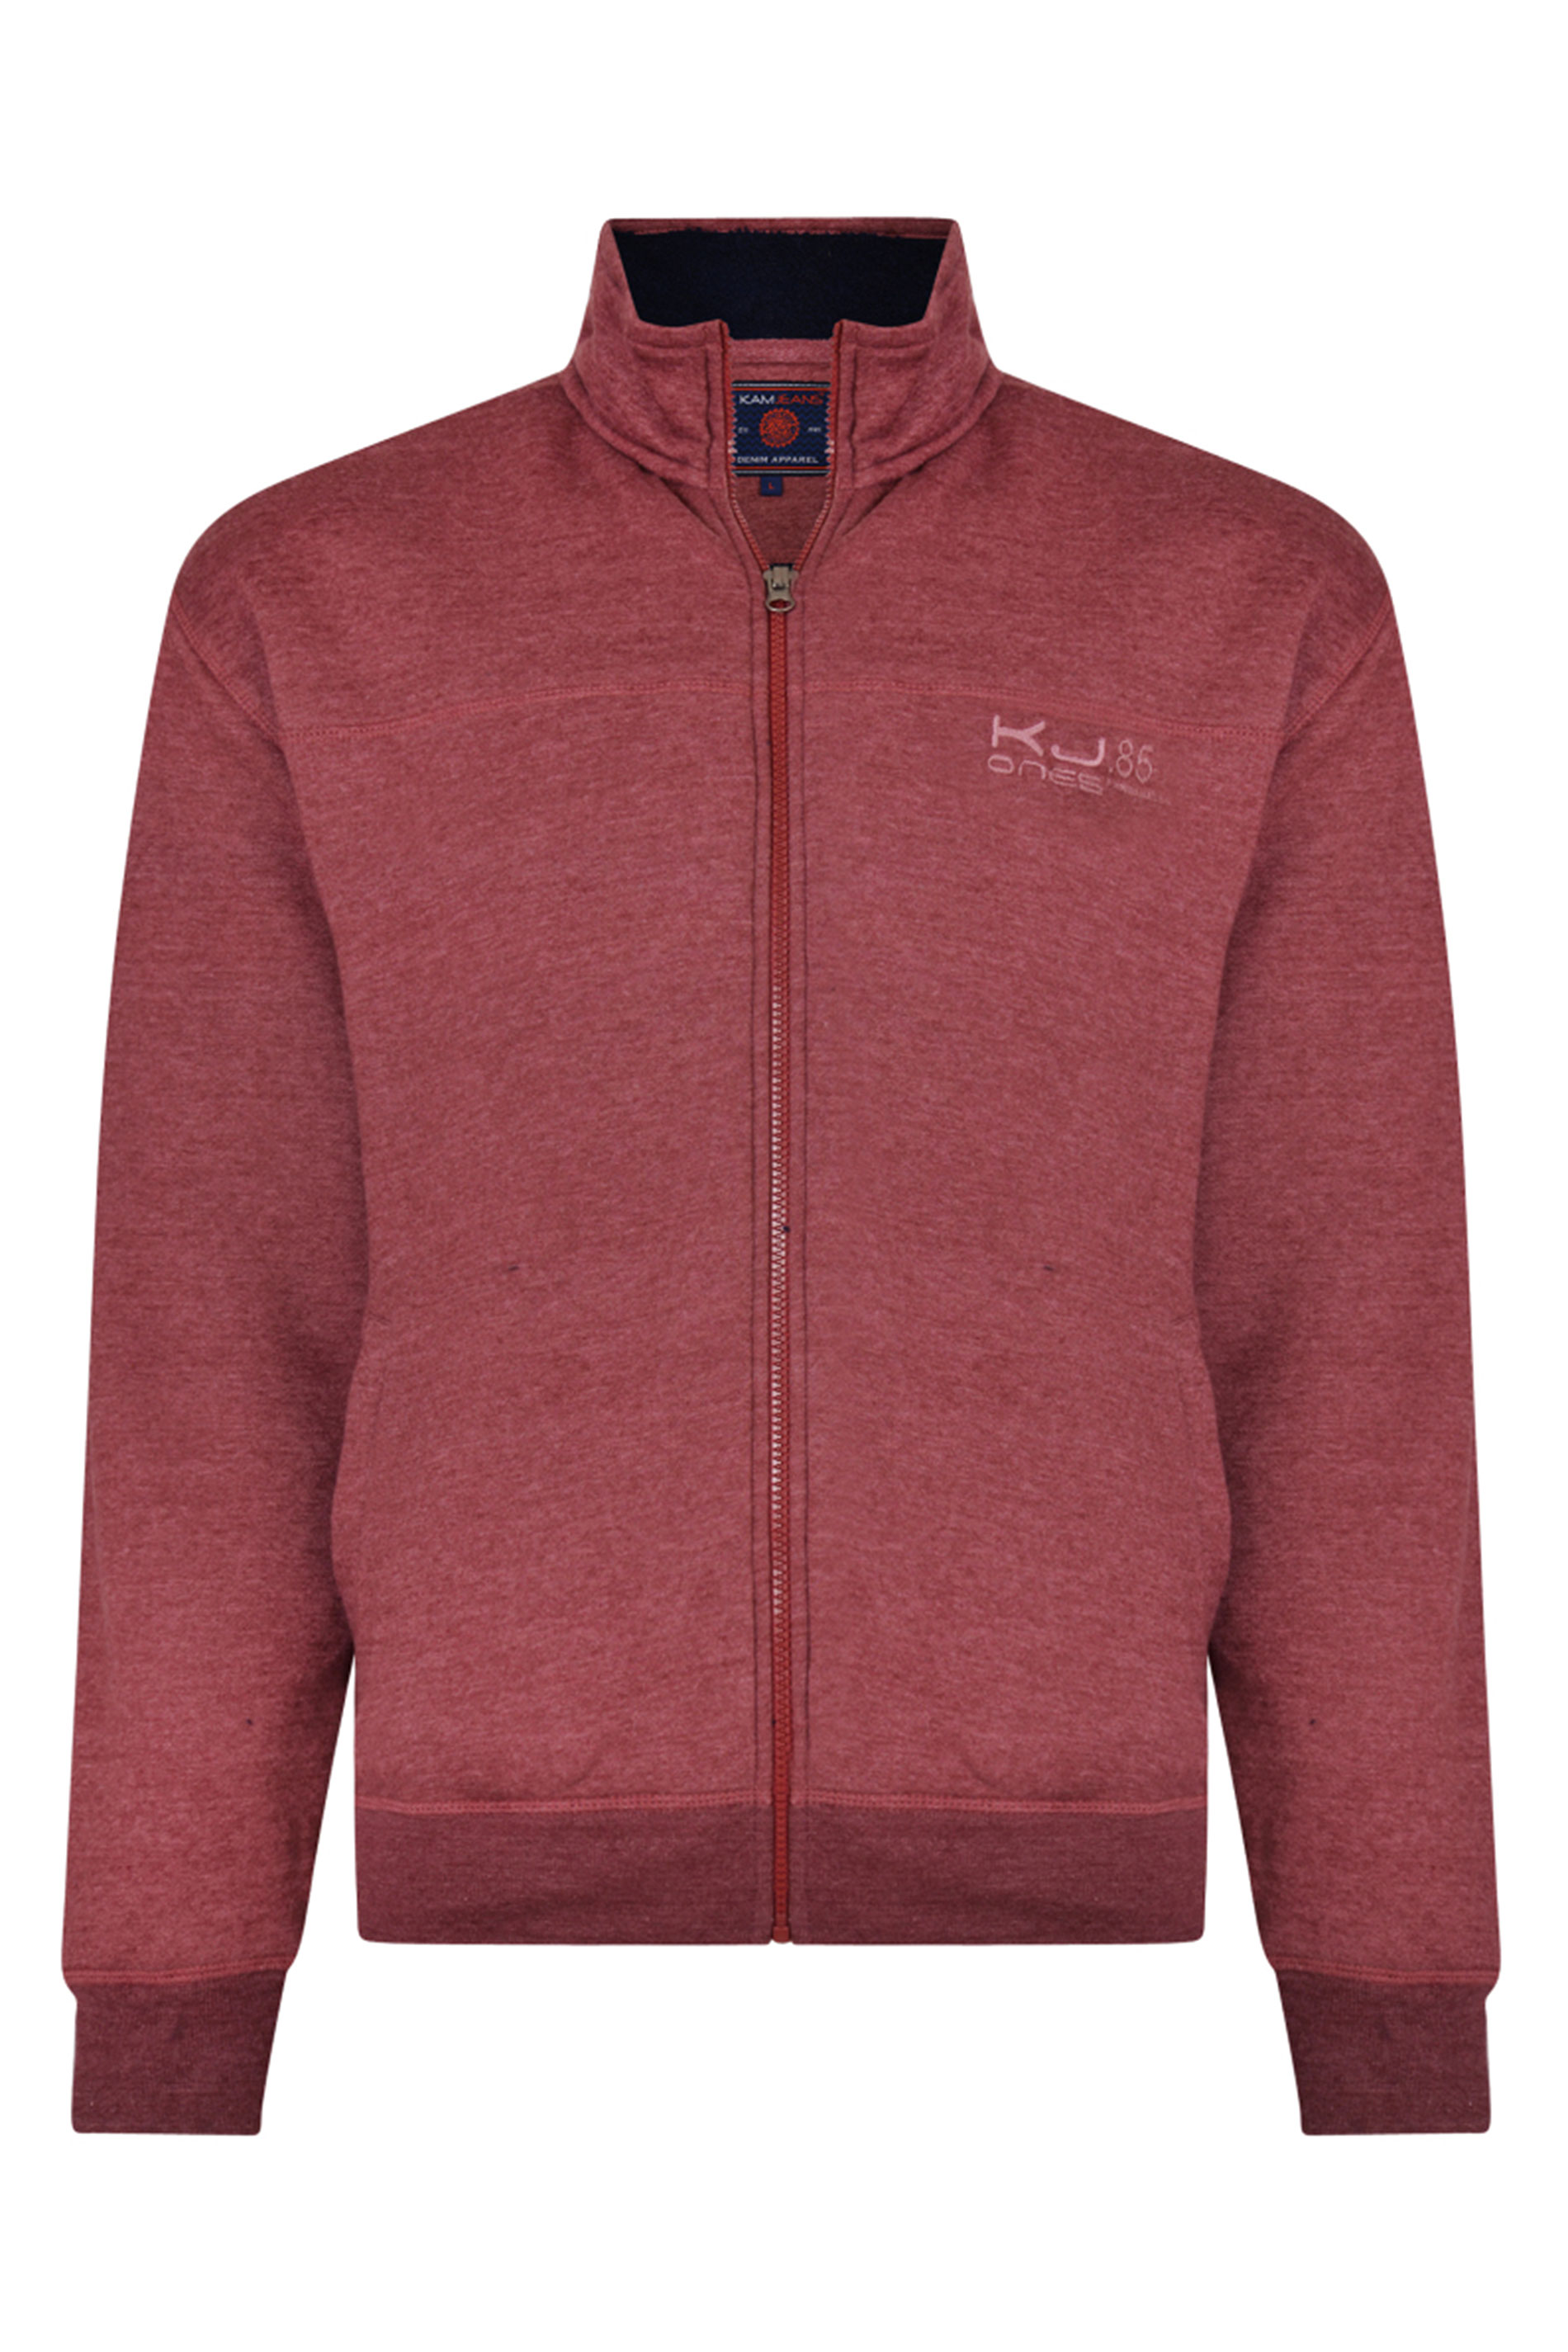 KAM Burgundy Fleece Lined Zip Through Sweatshirt_F.jpg